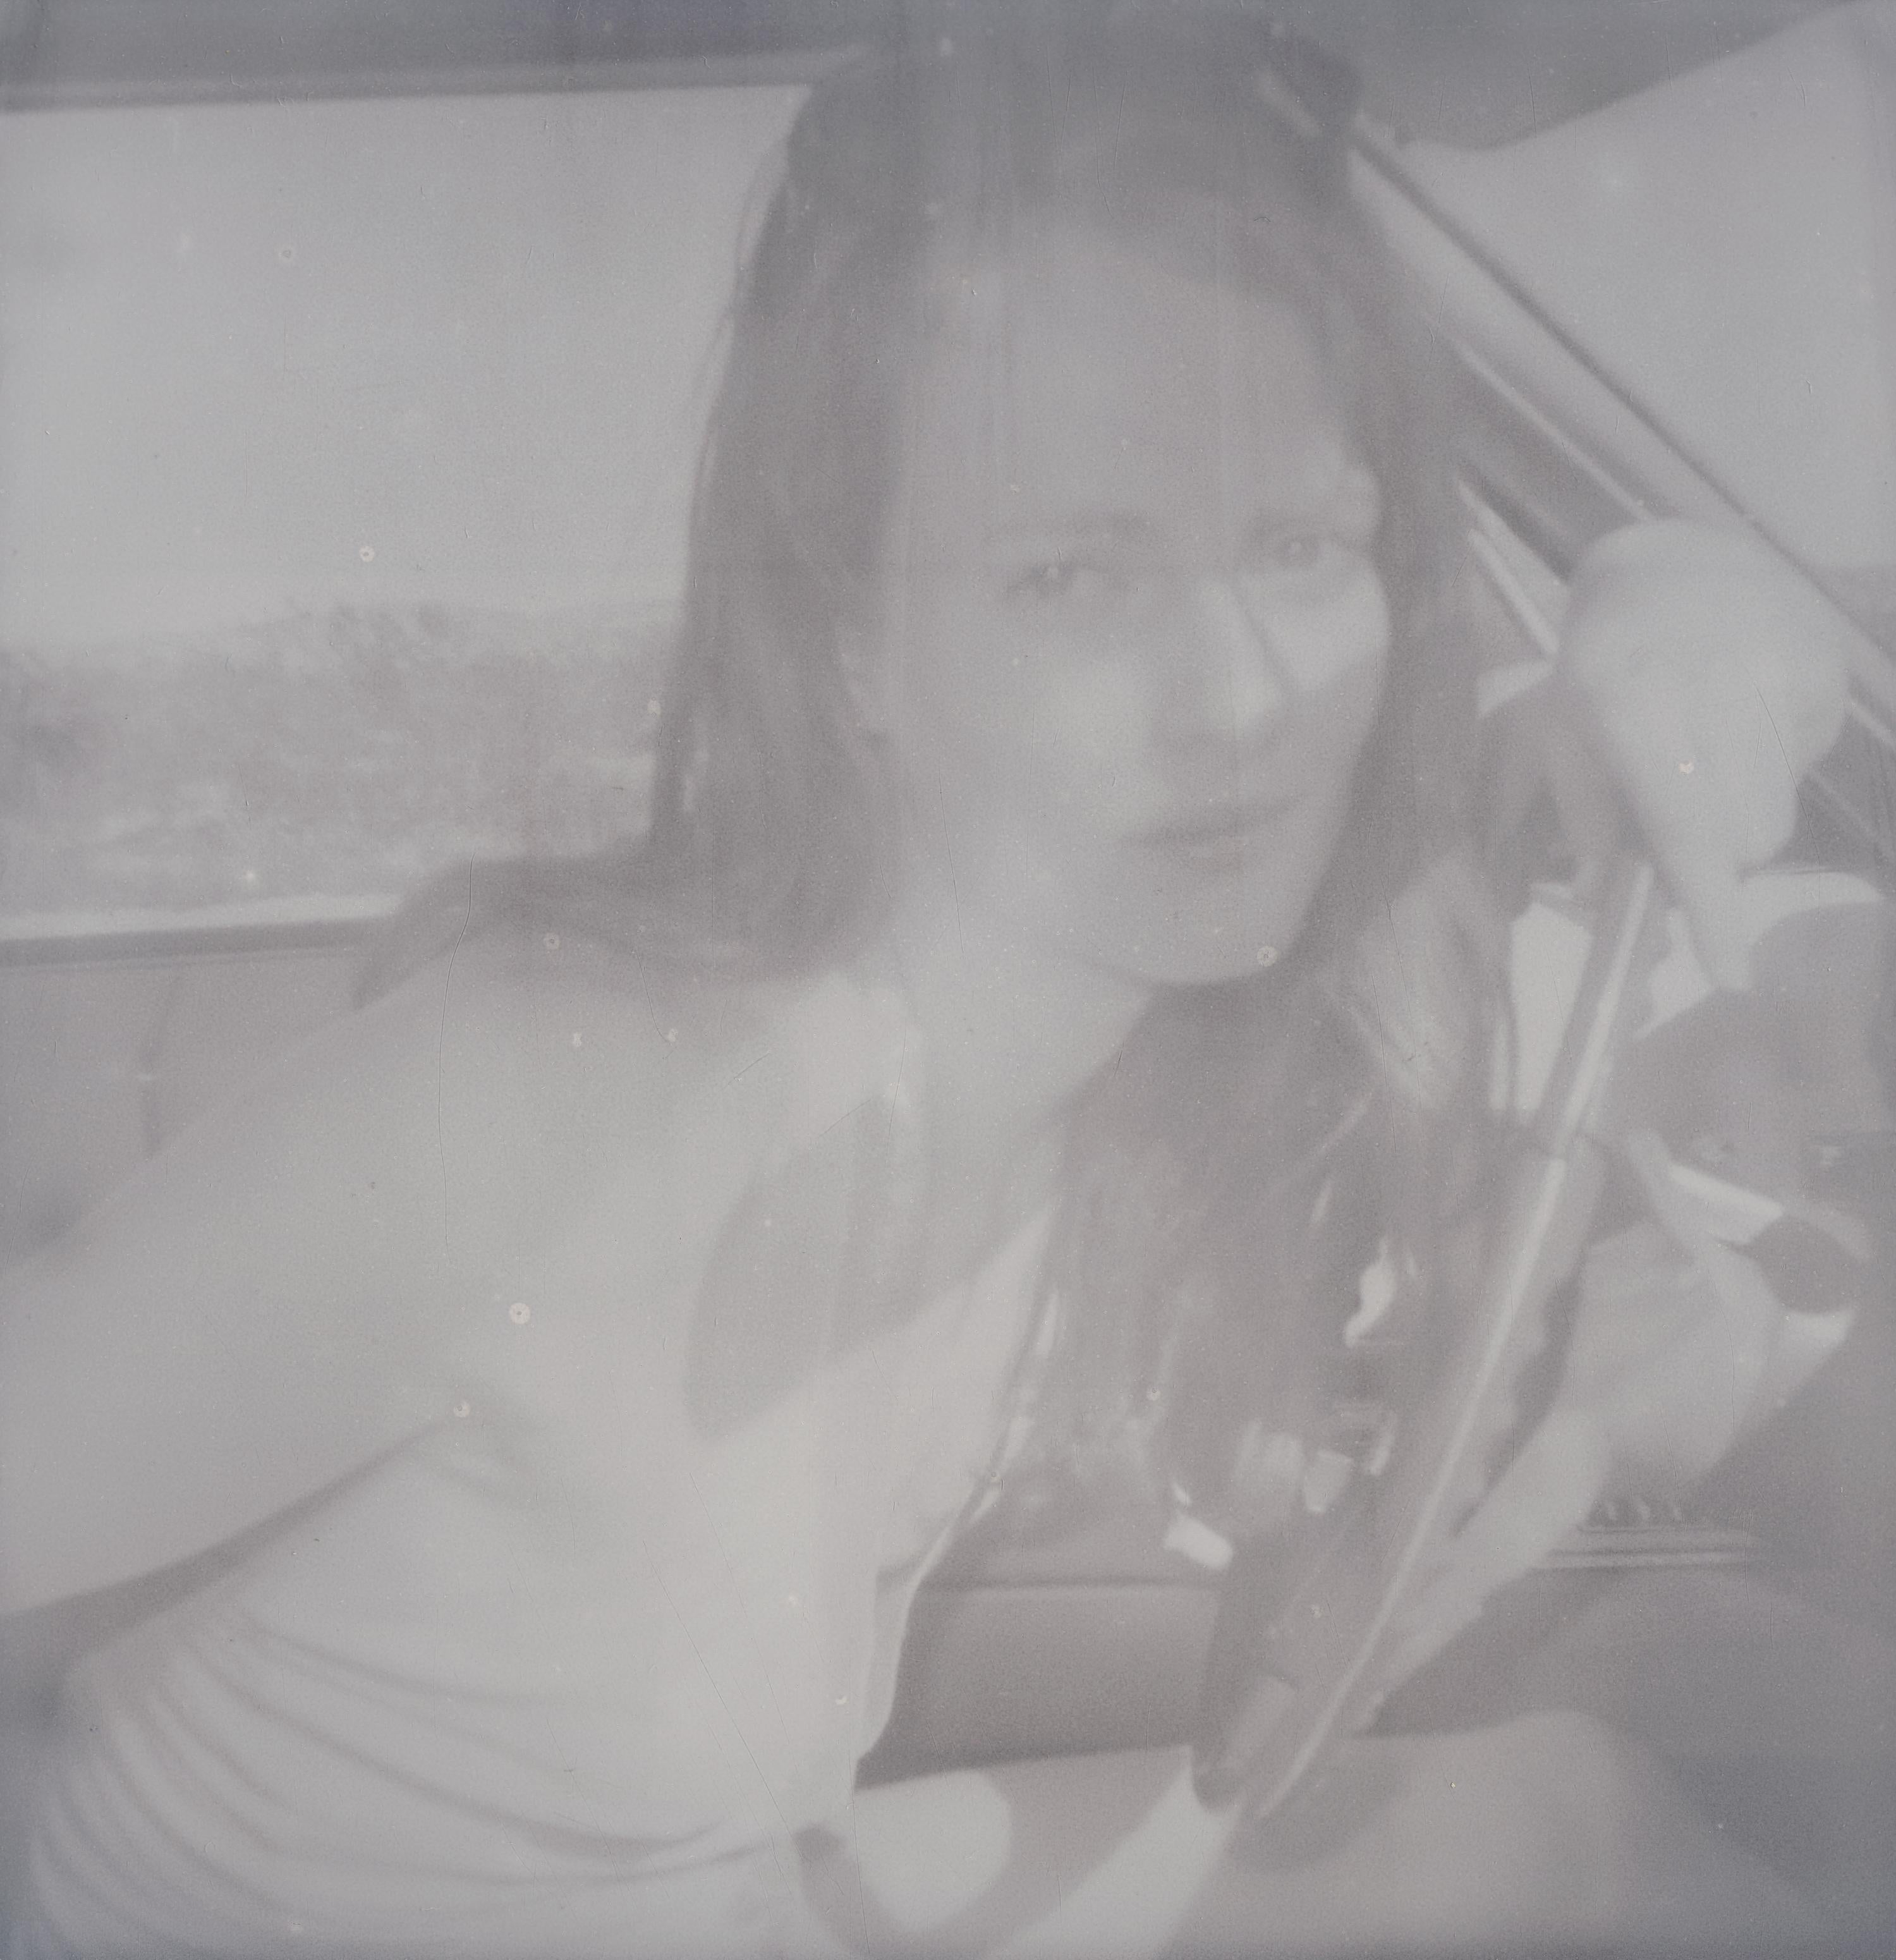 Black and White Photograph Stefanie Schneider - Pierce my Soul (Till Death do us Part) - Contemporain, Polaroïd, Femmes